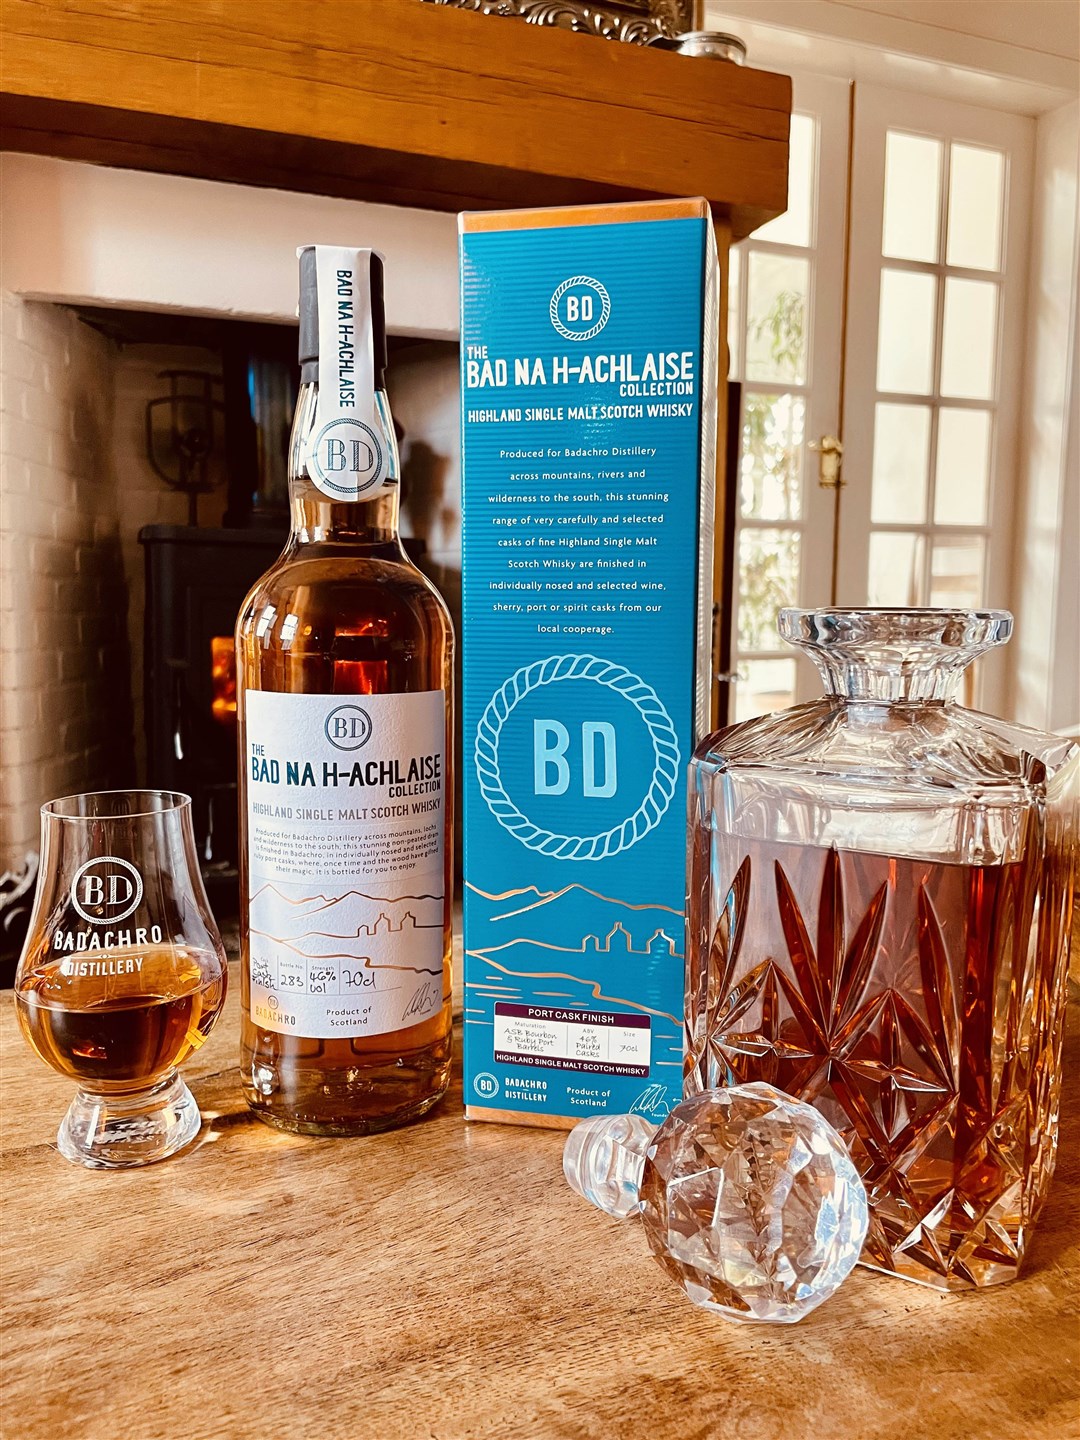 Bad na h-Achlaise Port Cask is the latest single malt whisky from the Highlands’ Badachro Distillery.